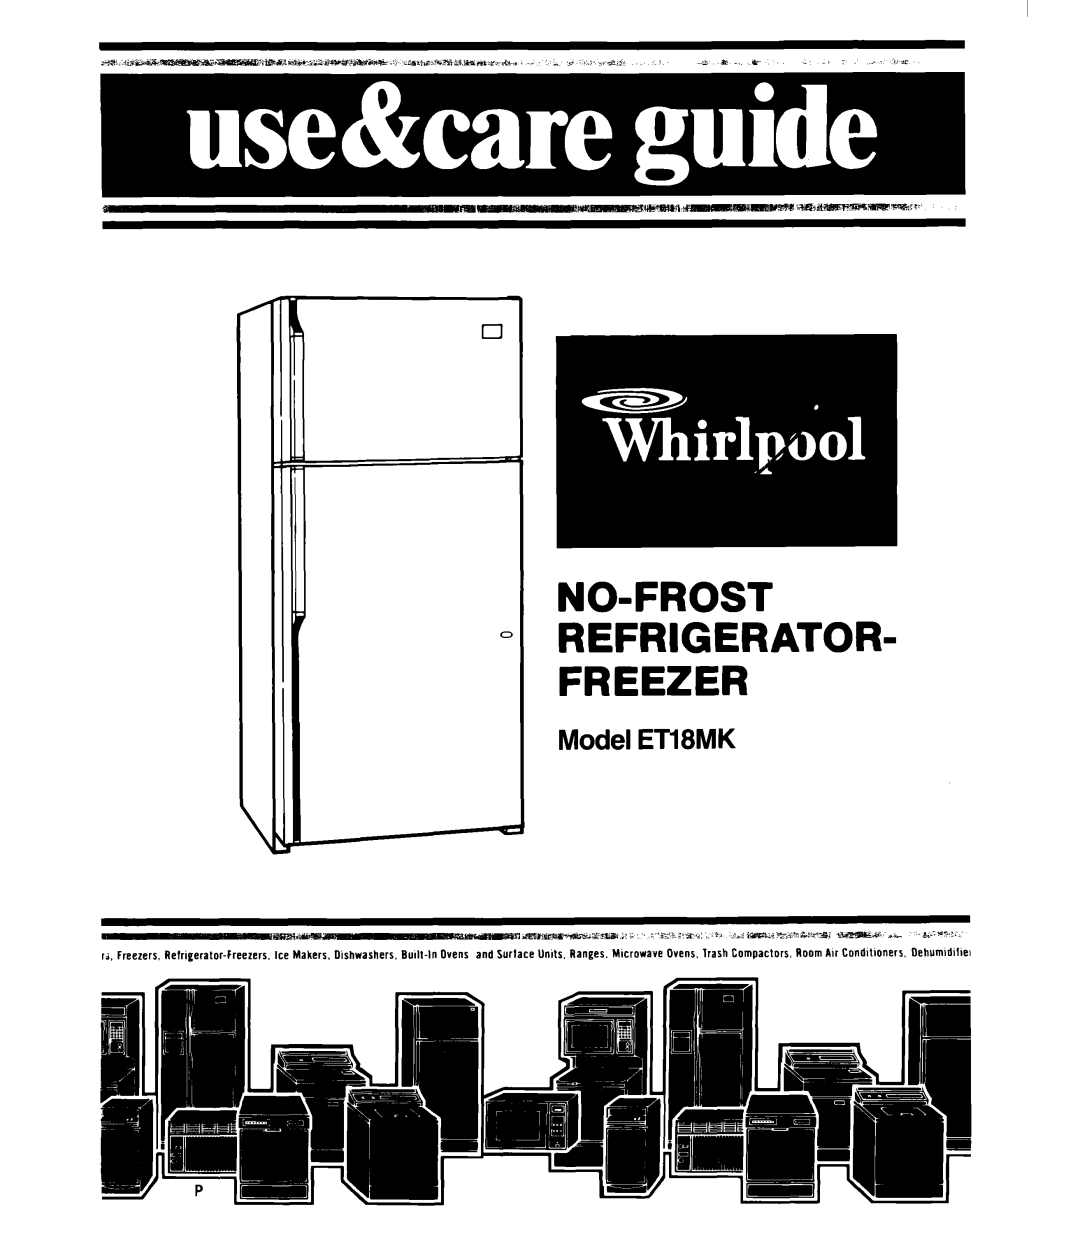 Whirlpool ET18MK manual No-Frost Refrigerator Freezer, Model ETl8MK 